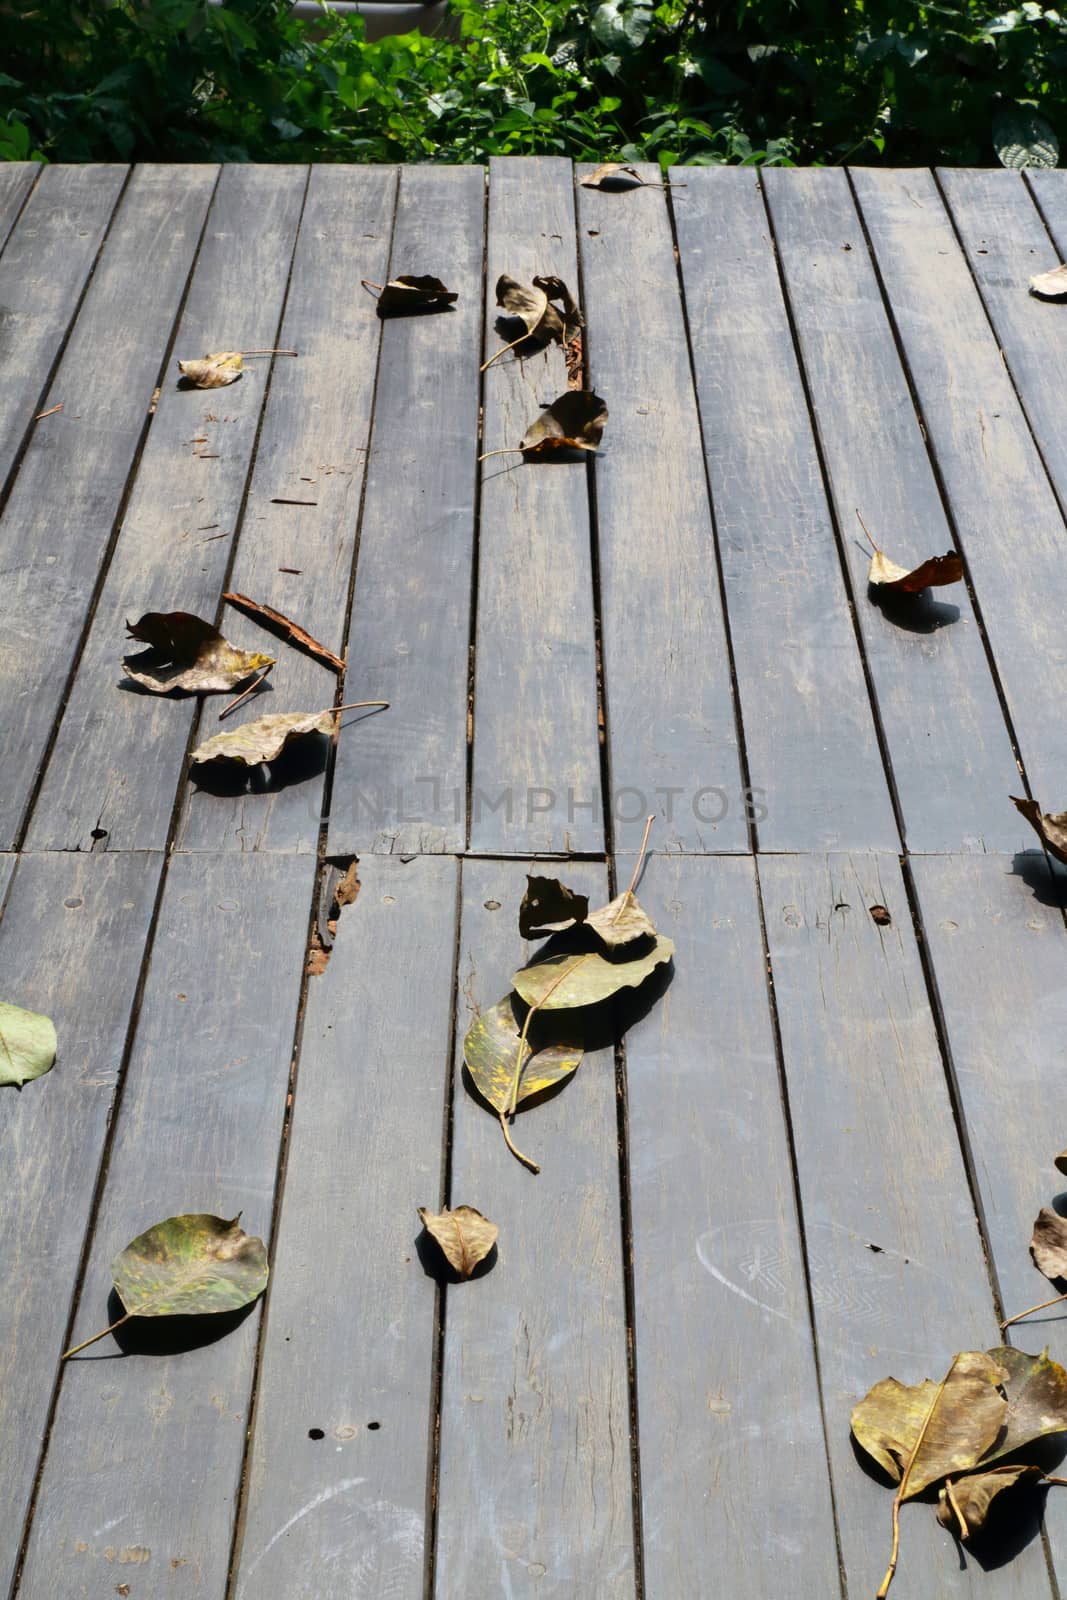 dry leaves on wooden floor by kaidevil